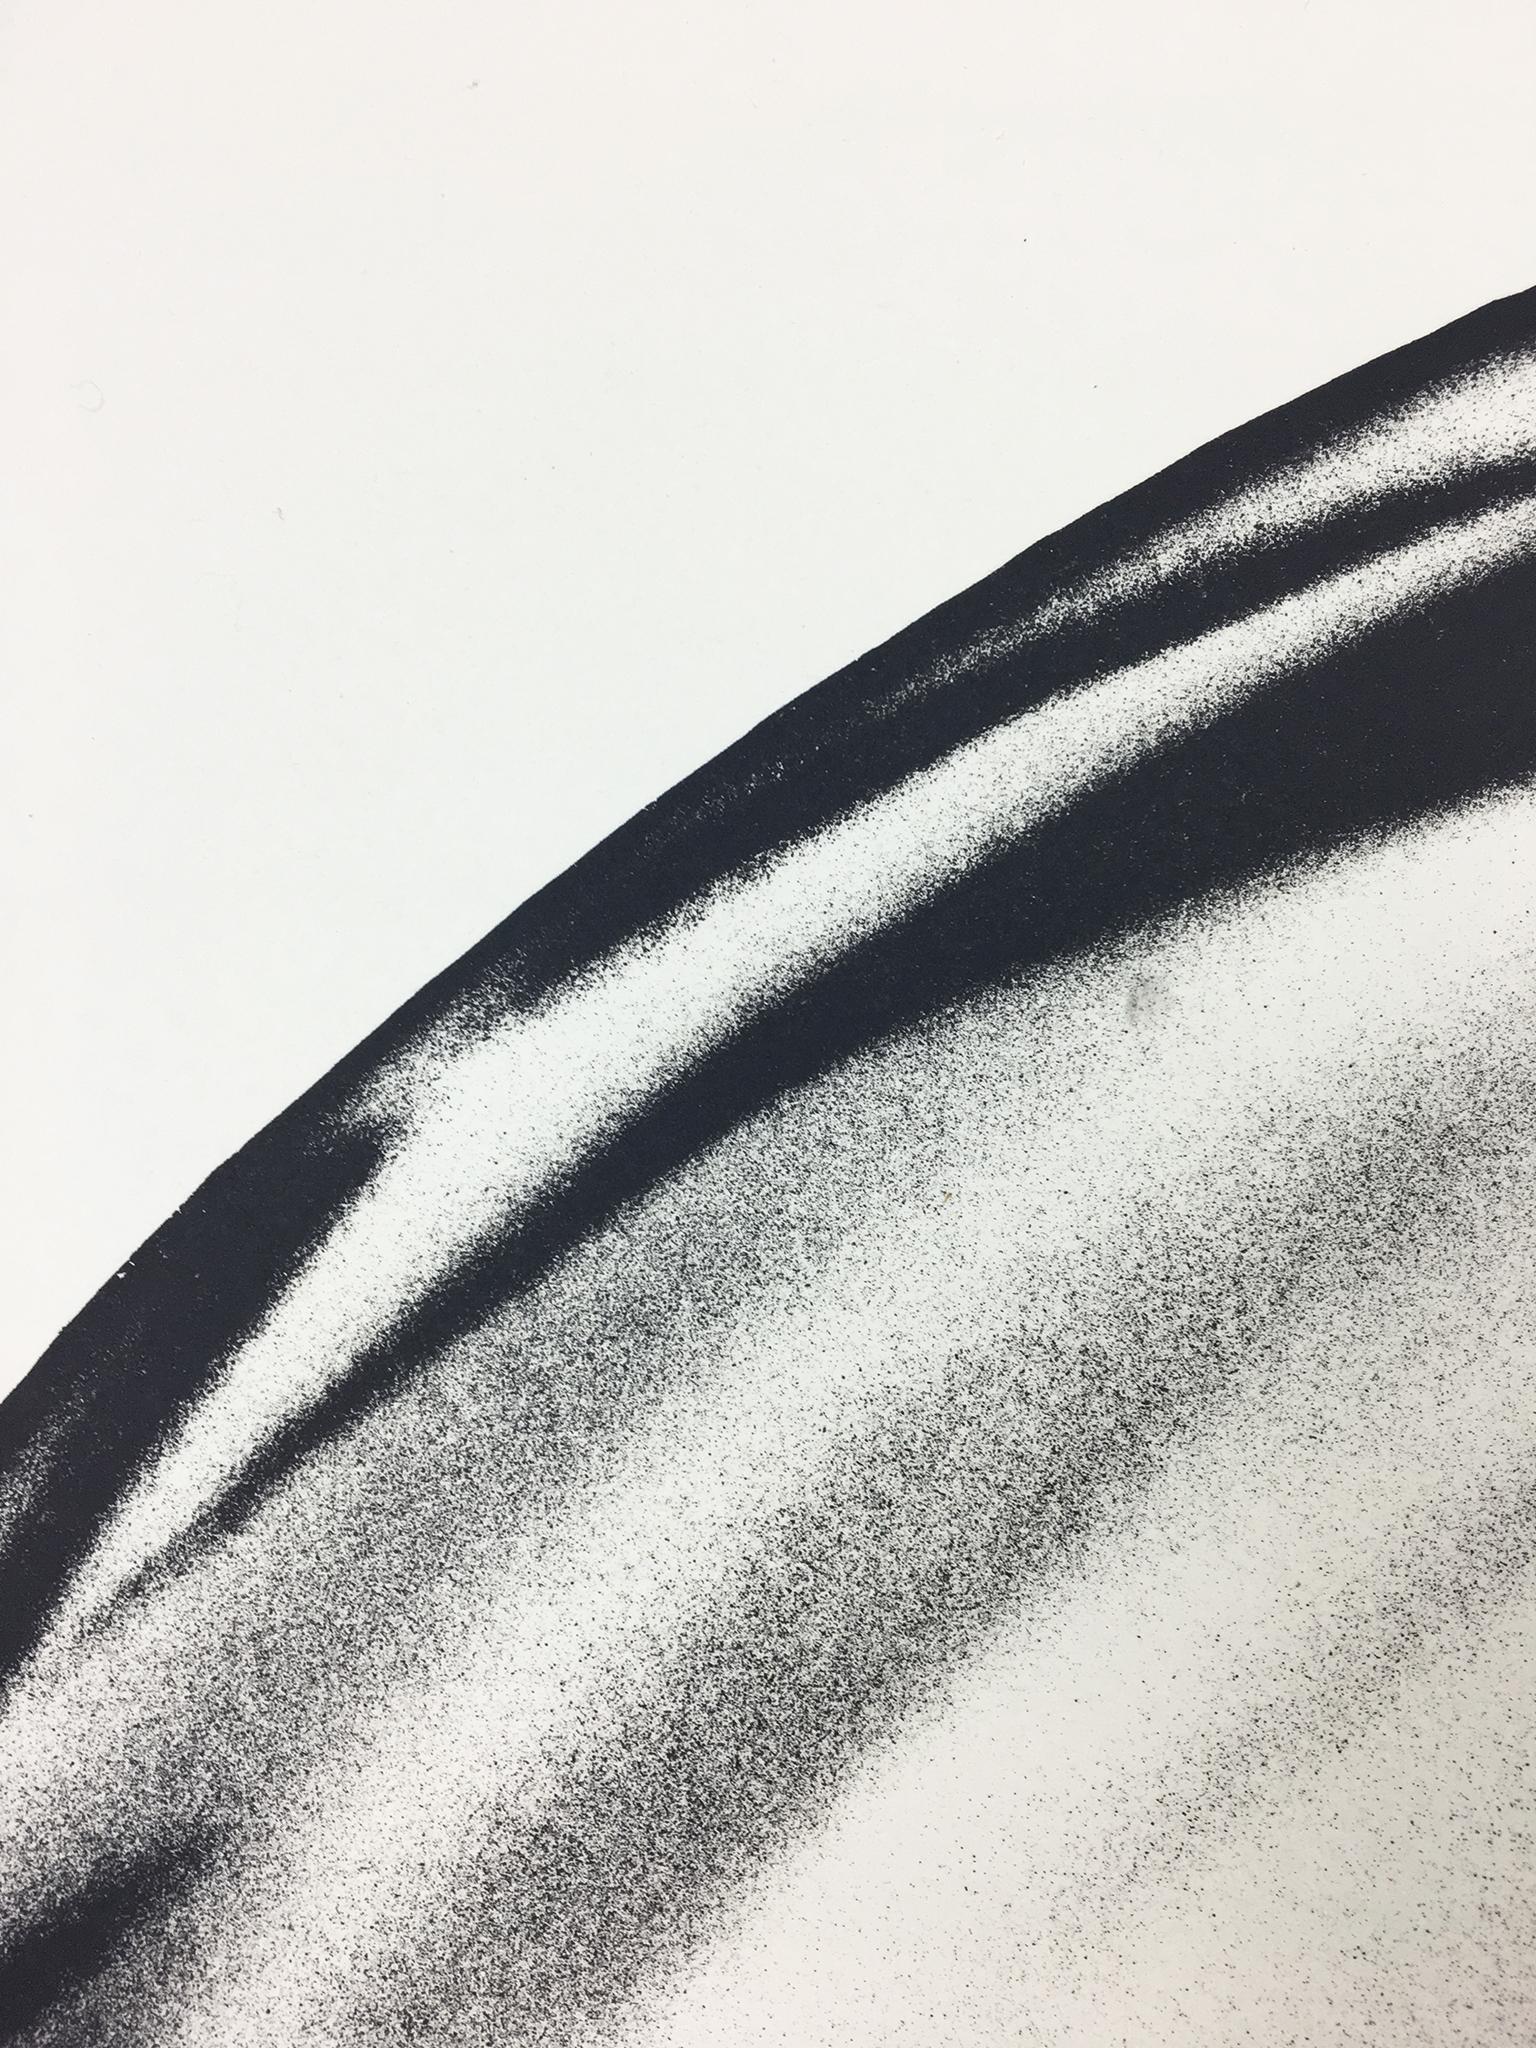 Tube James Rosenquist Black and white abstract Pop art chrome based on painting 2